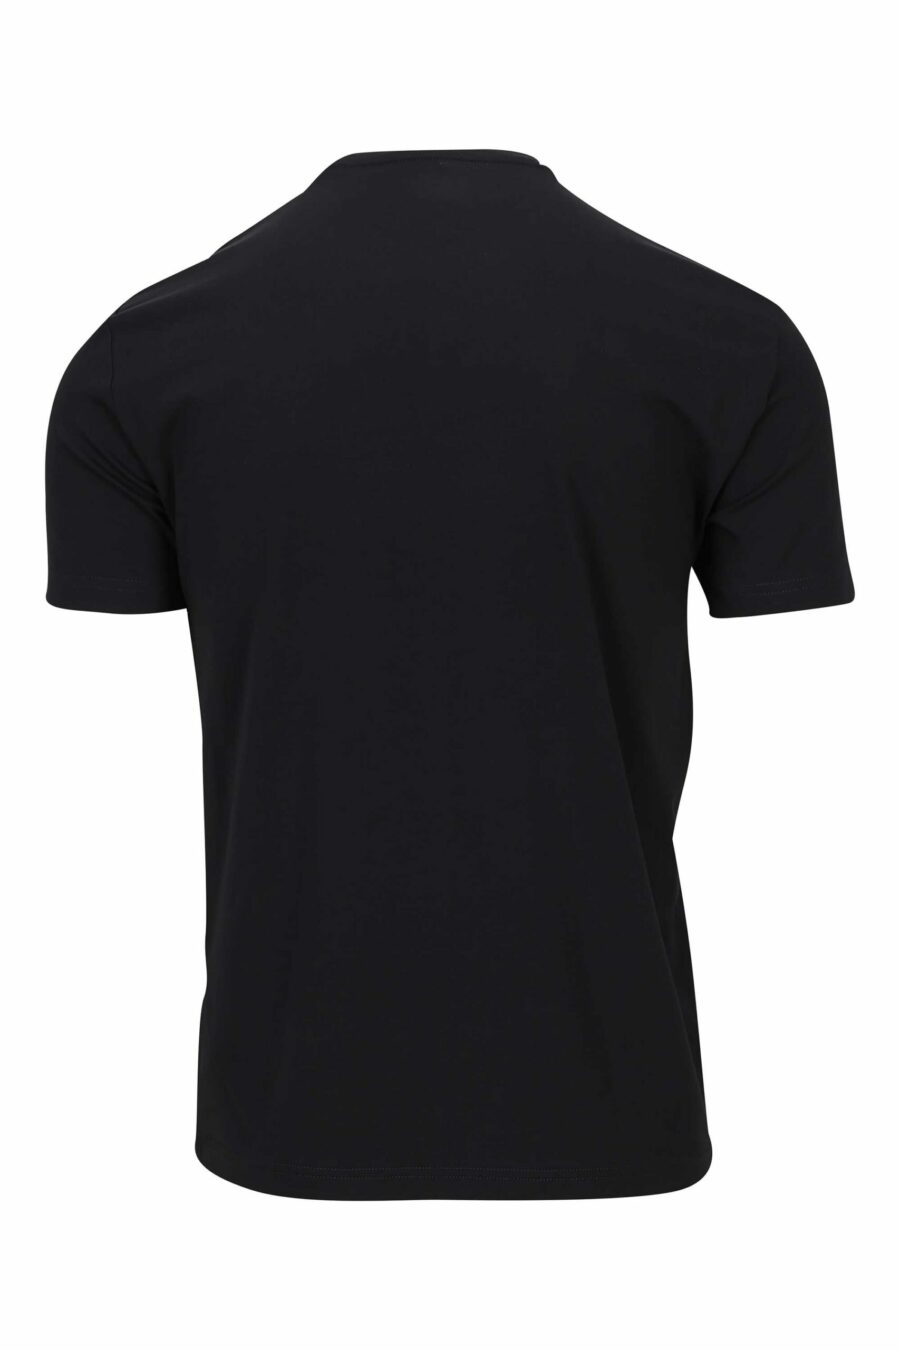 Camiseta negra con maxilogo mix "lux identity" azul - 8056787953161 1 scaled